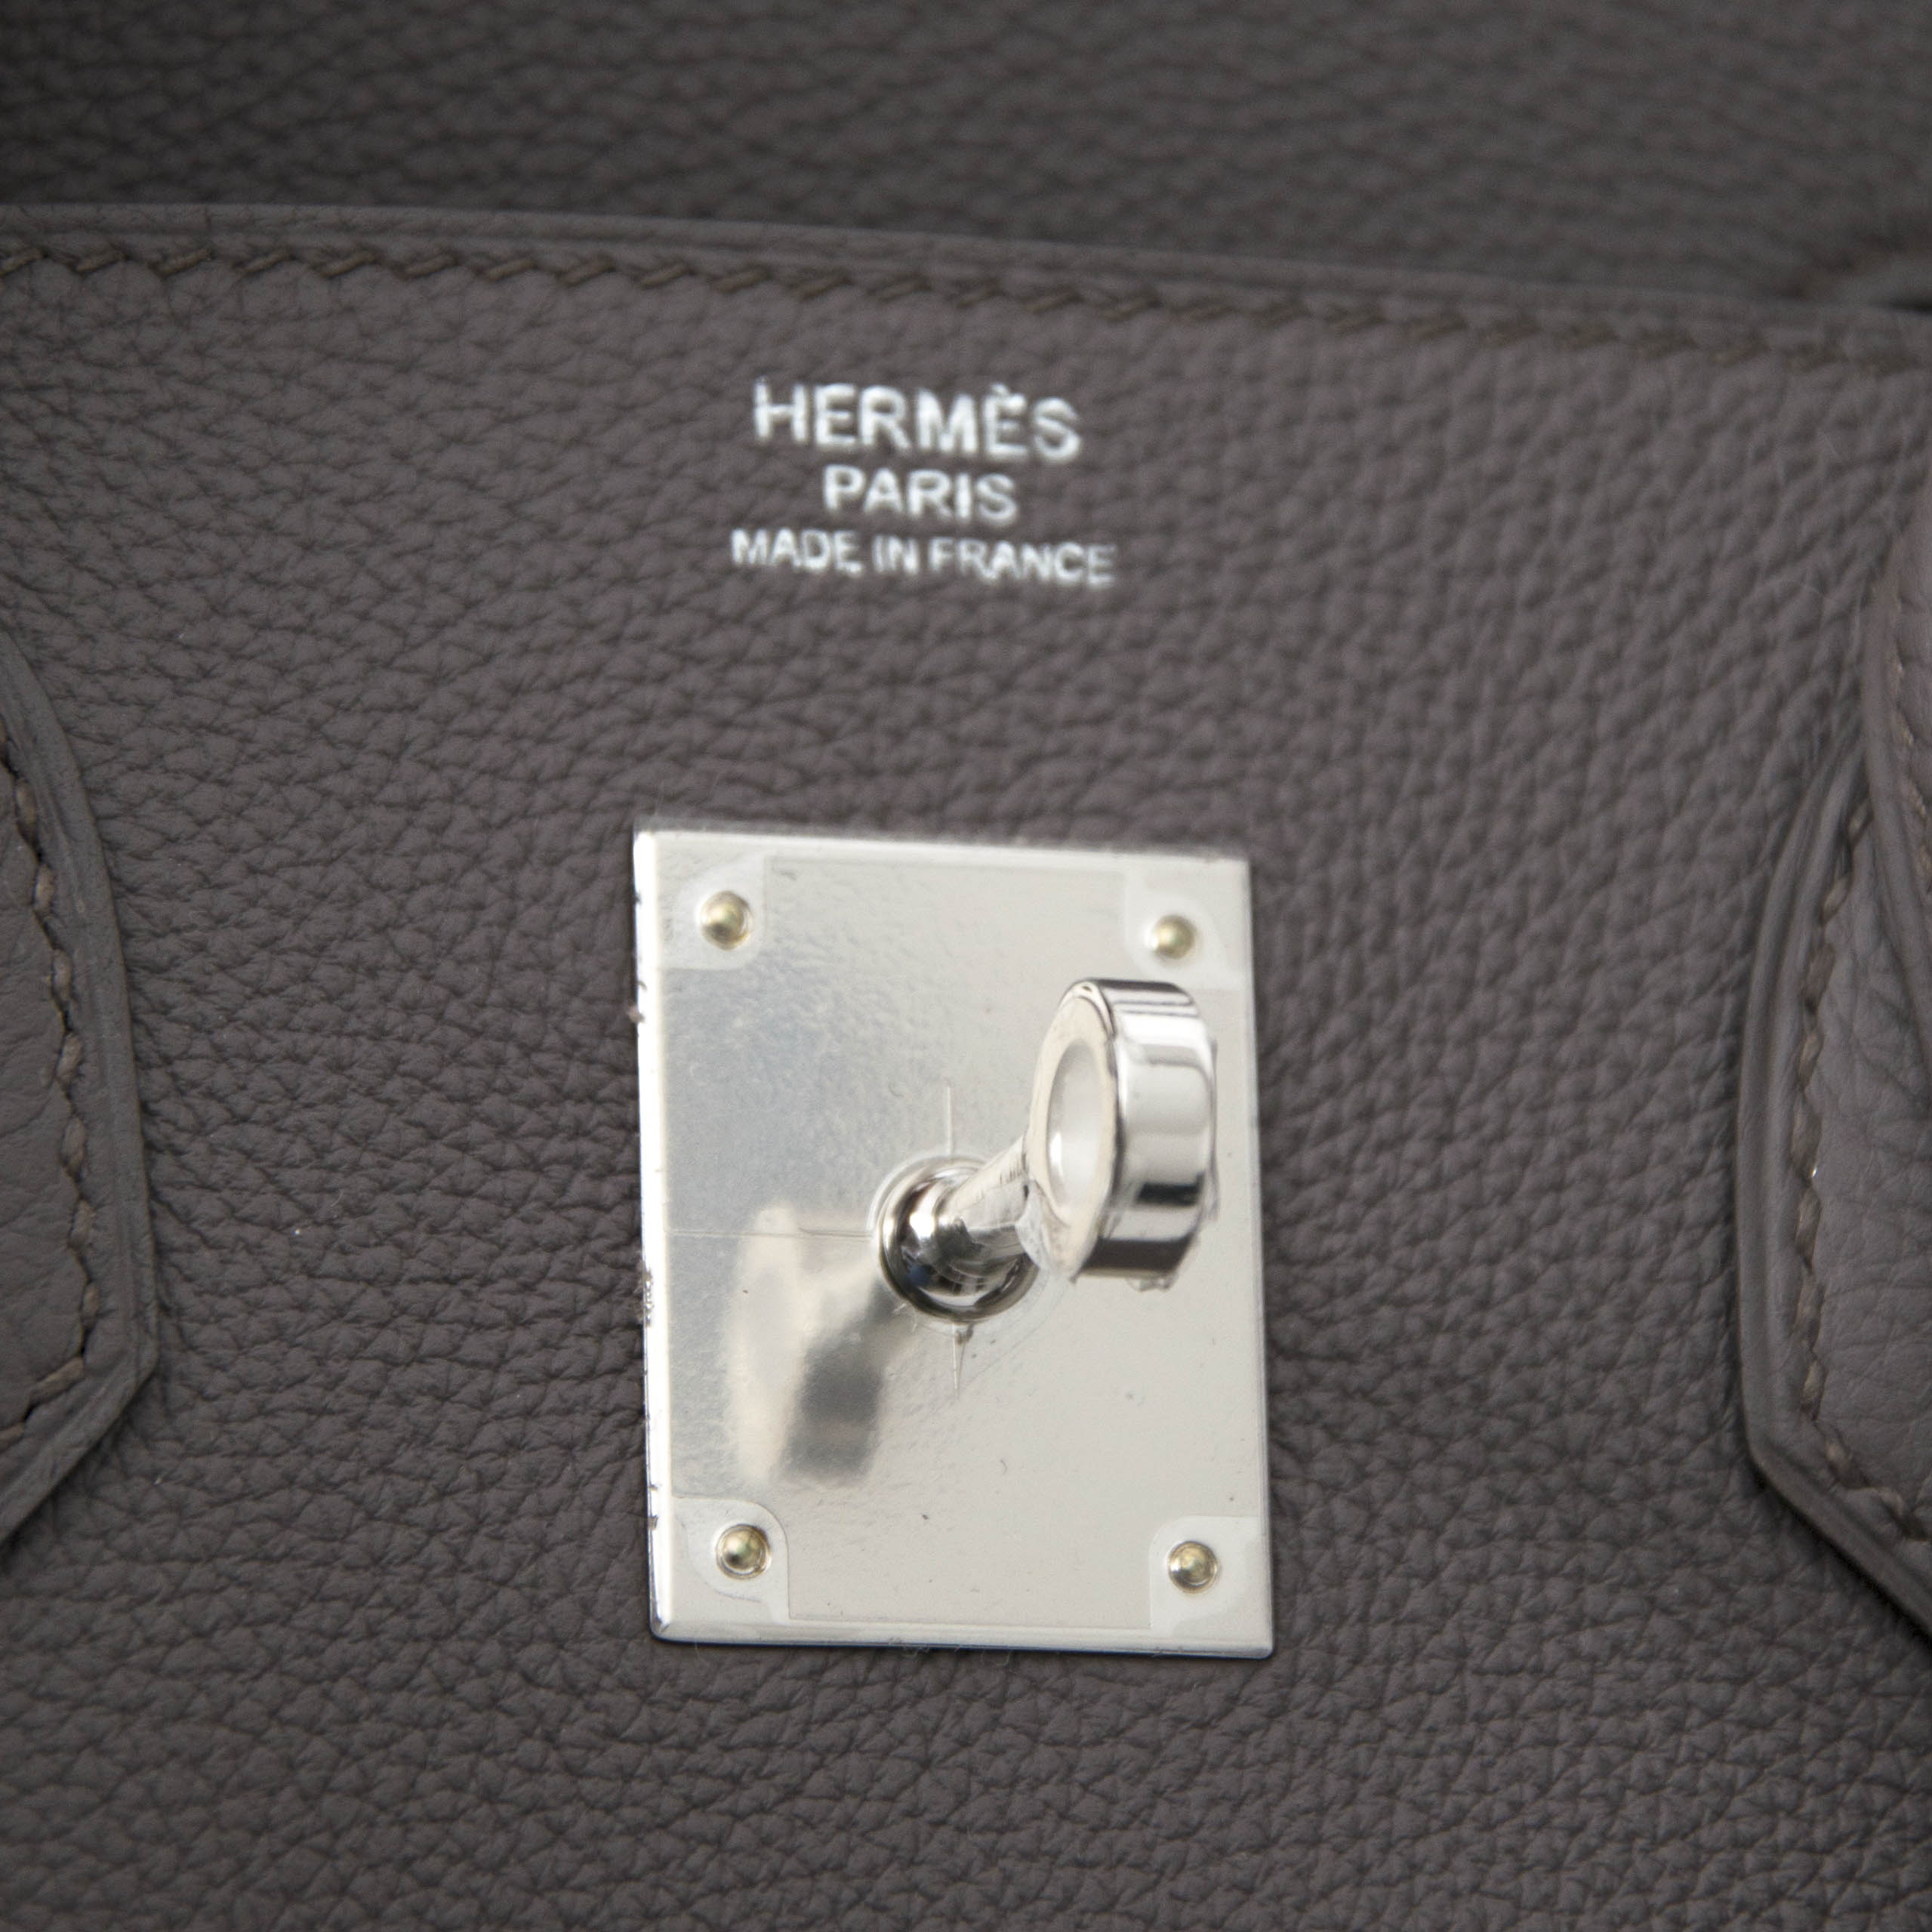 Hermès Birkin 30 Togo Gris Etain